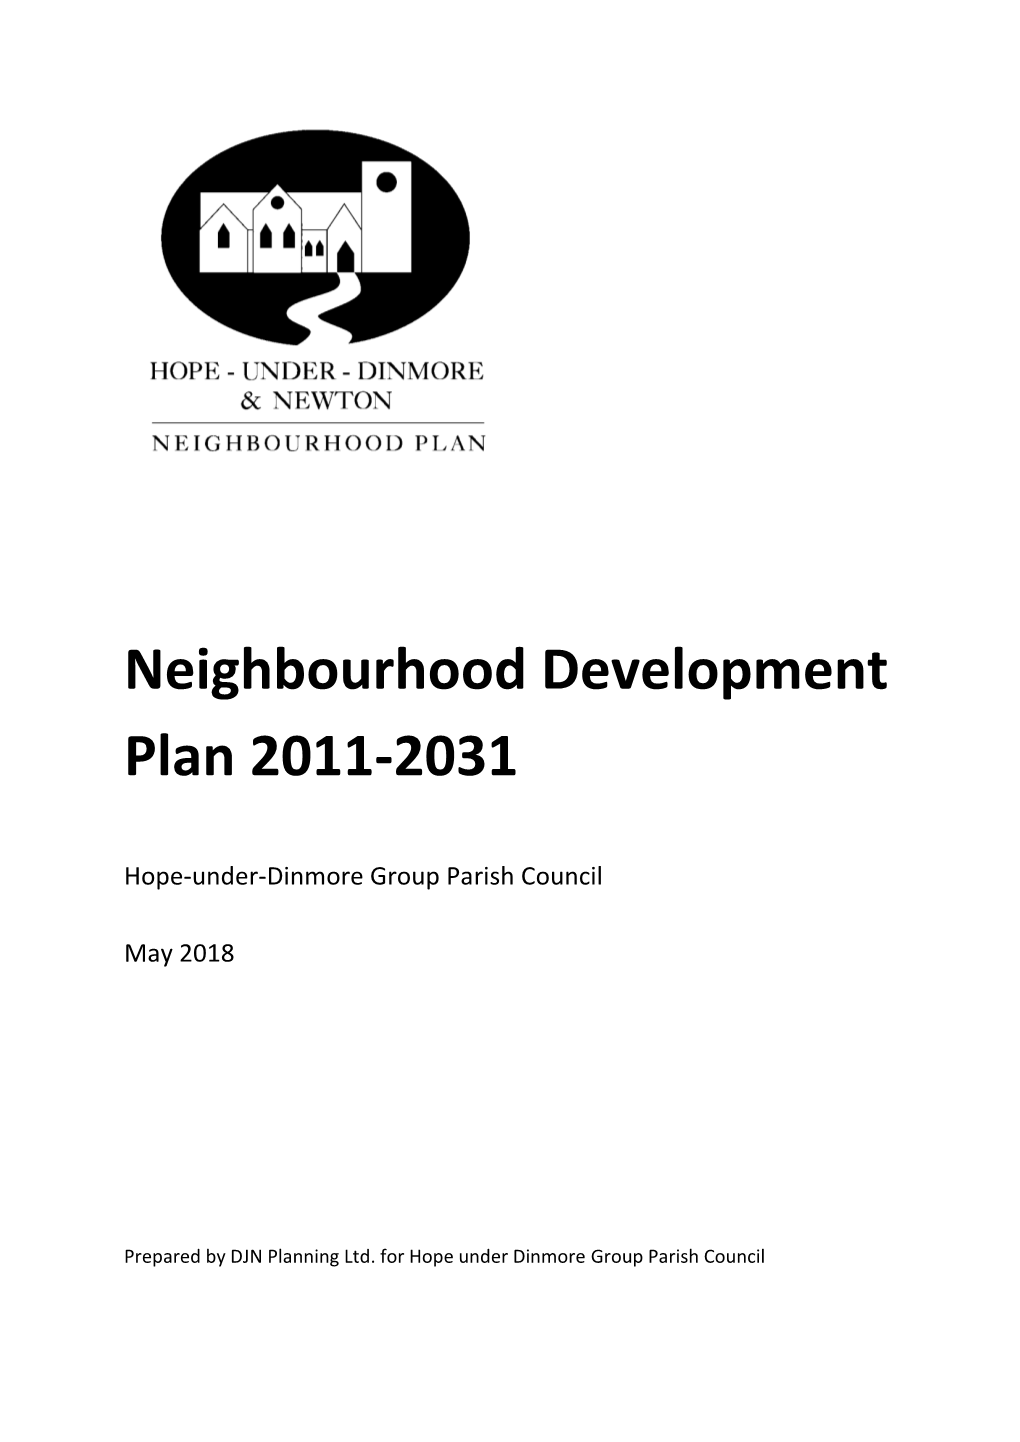 Hope Under Dinmore Neighbourhood Plan May 2018